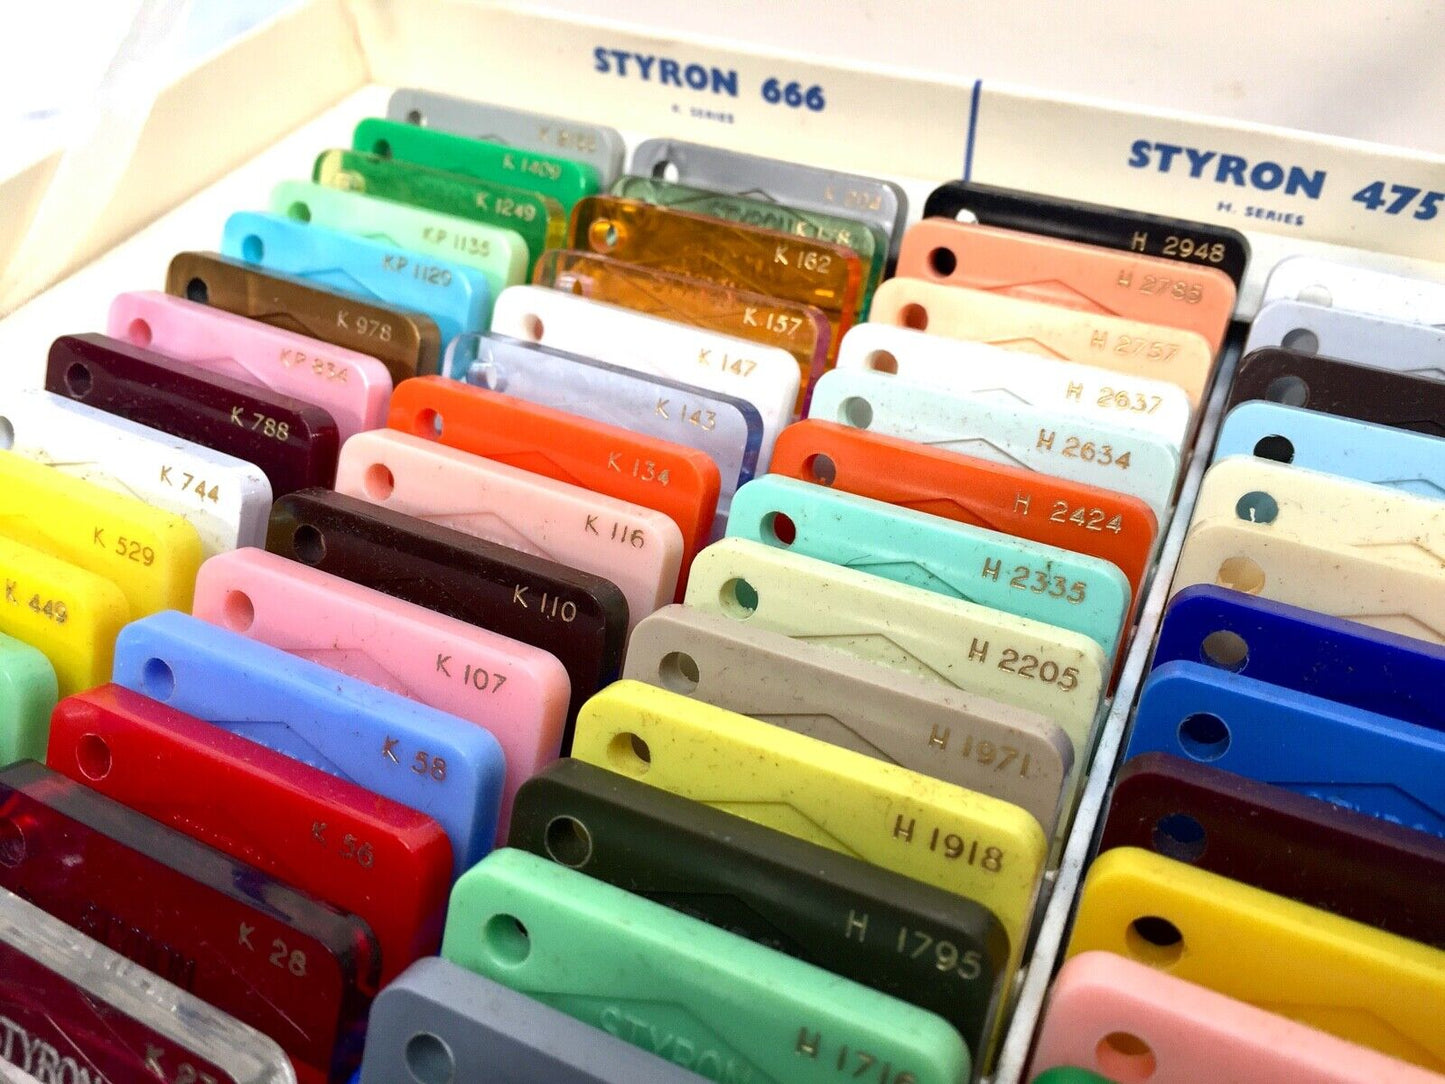 Styron Polystyrene Resin Products Sample Box / Shop Display